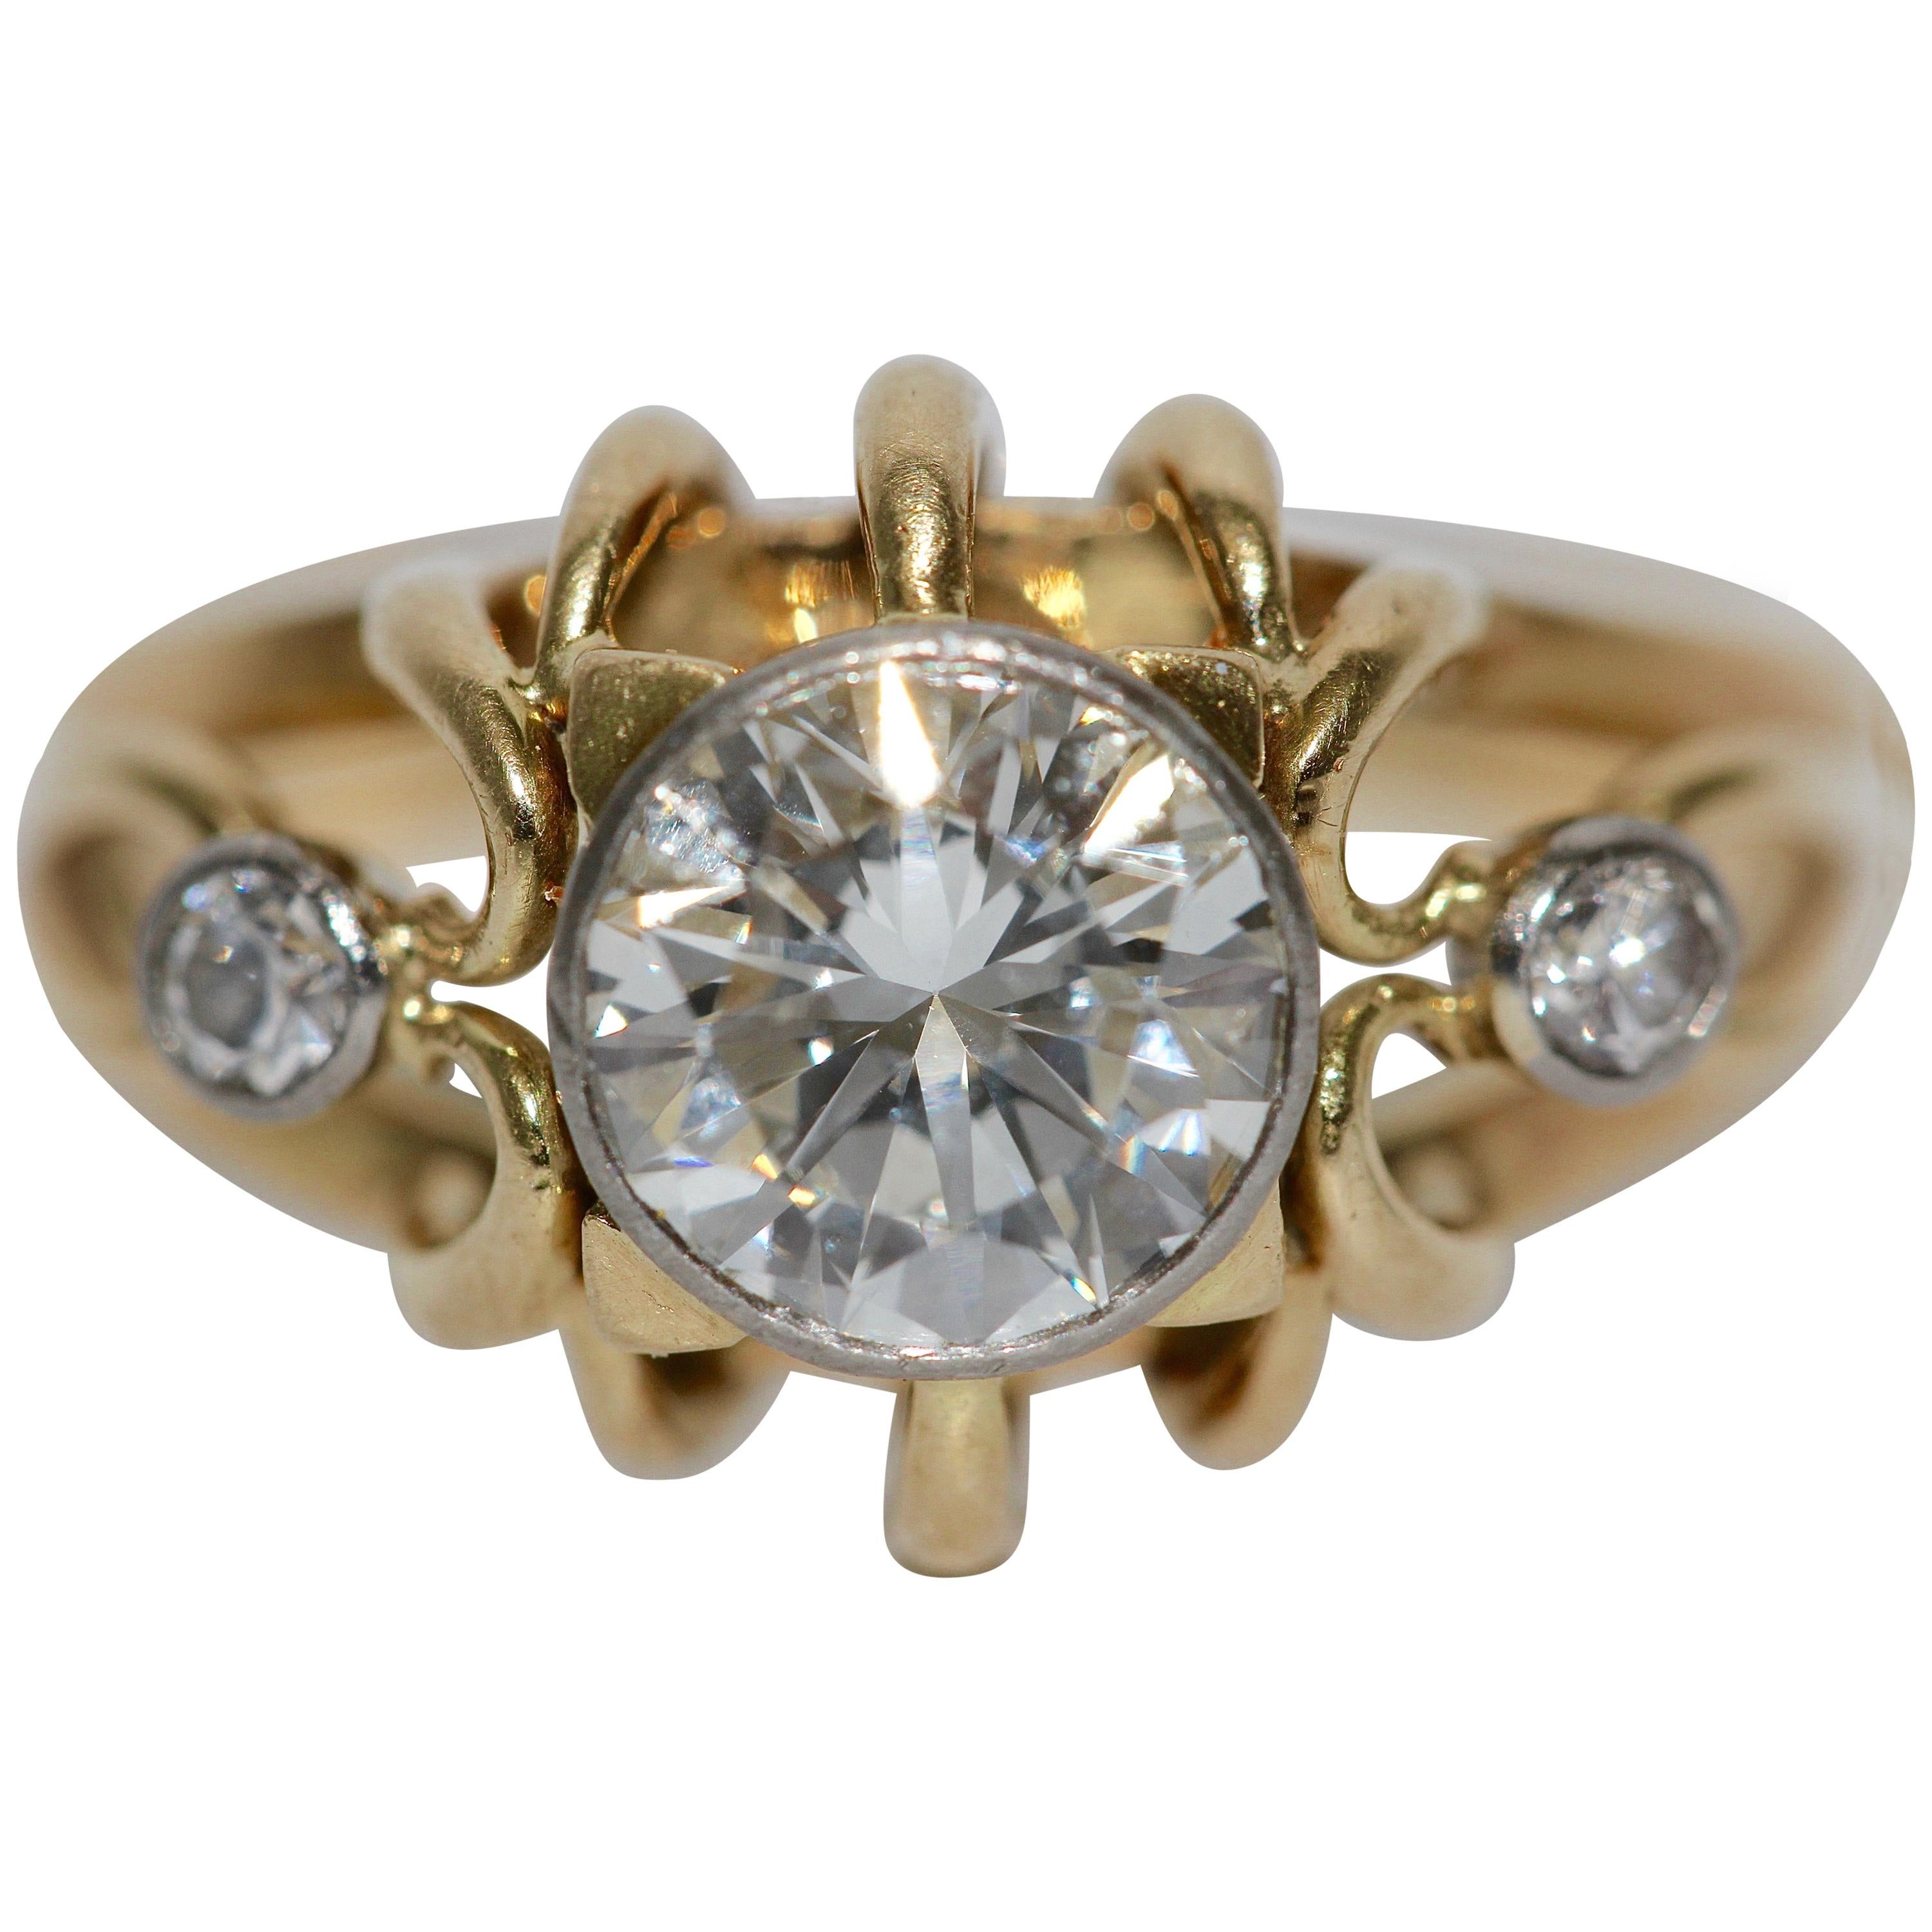 Diamond Bridal Ring with Solitaire 1.5 Carat, Top Wesselton, VS1, 14 Karat Gold